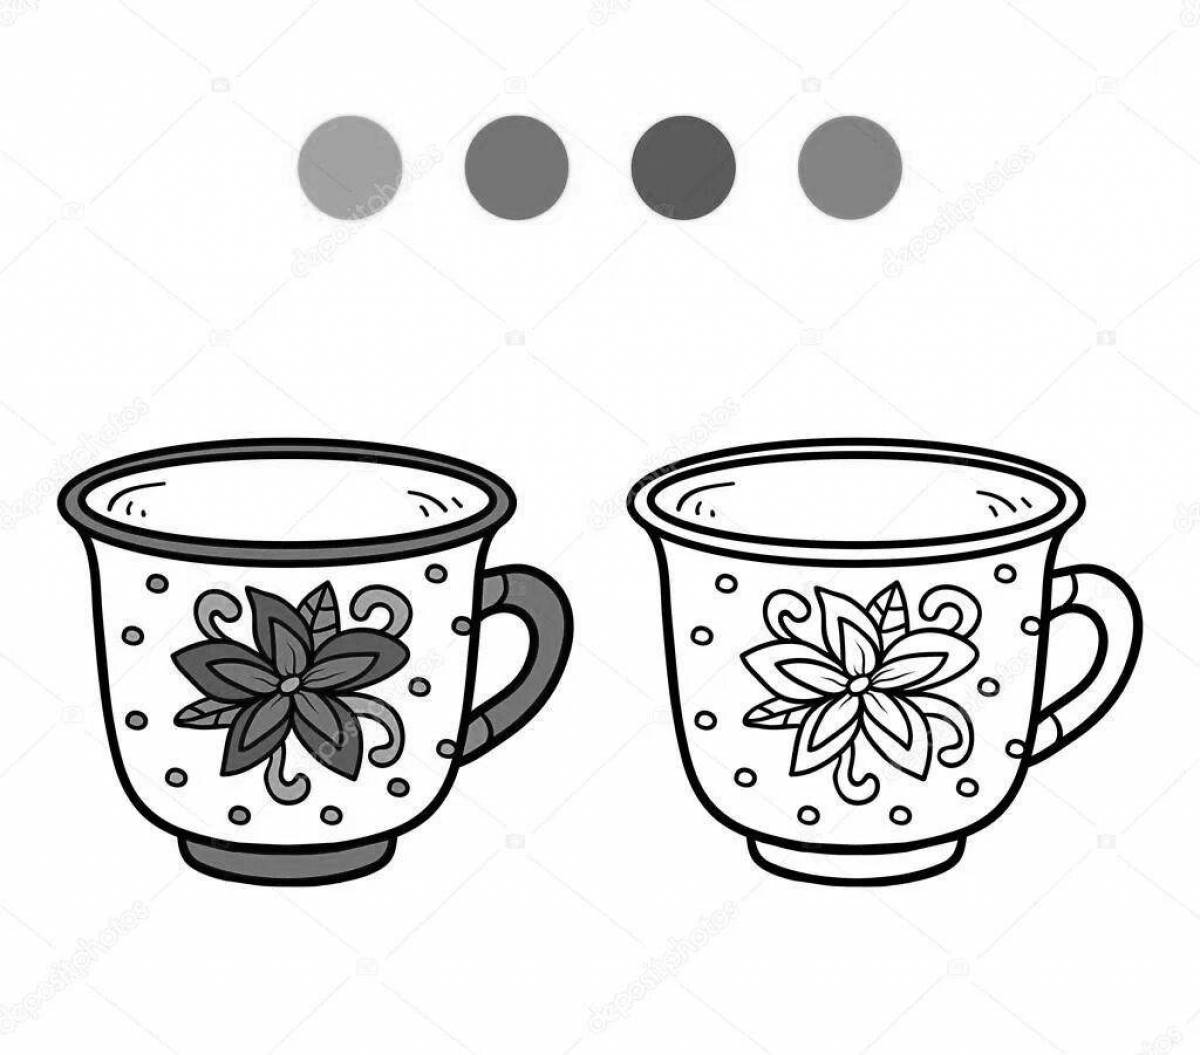 Weird polka dot mug coloring